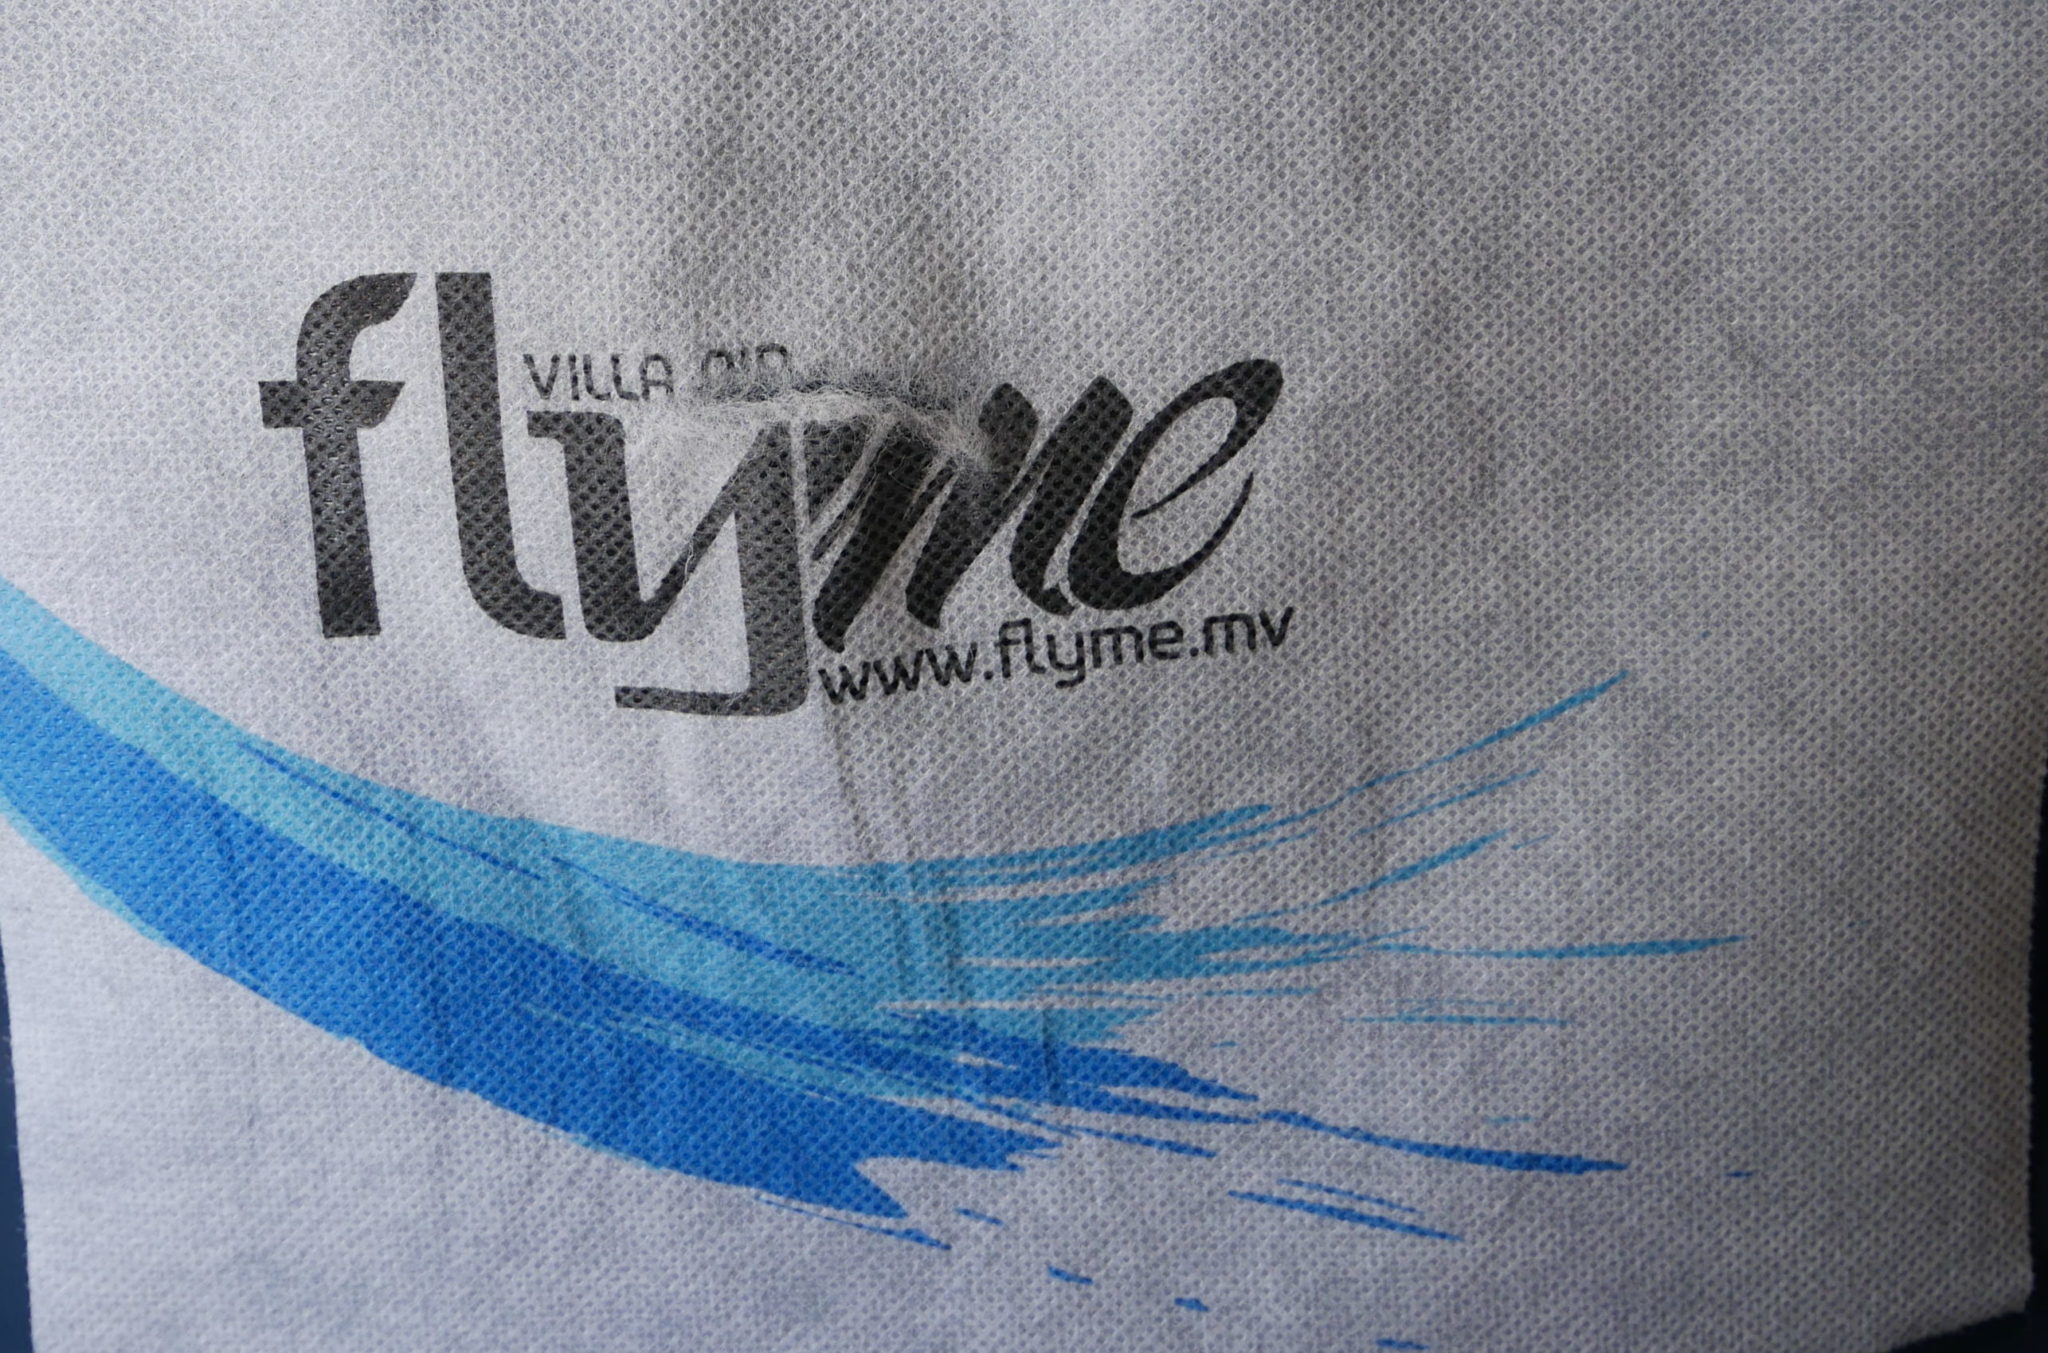 Flyme headrest cover in ATR 72-500 plane